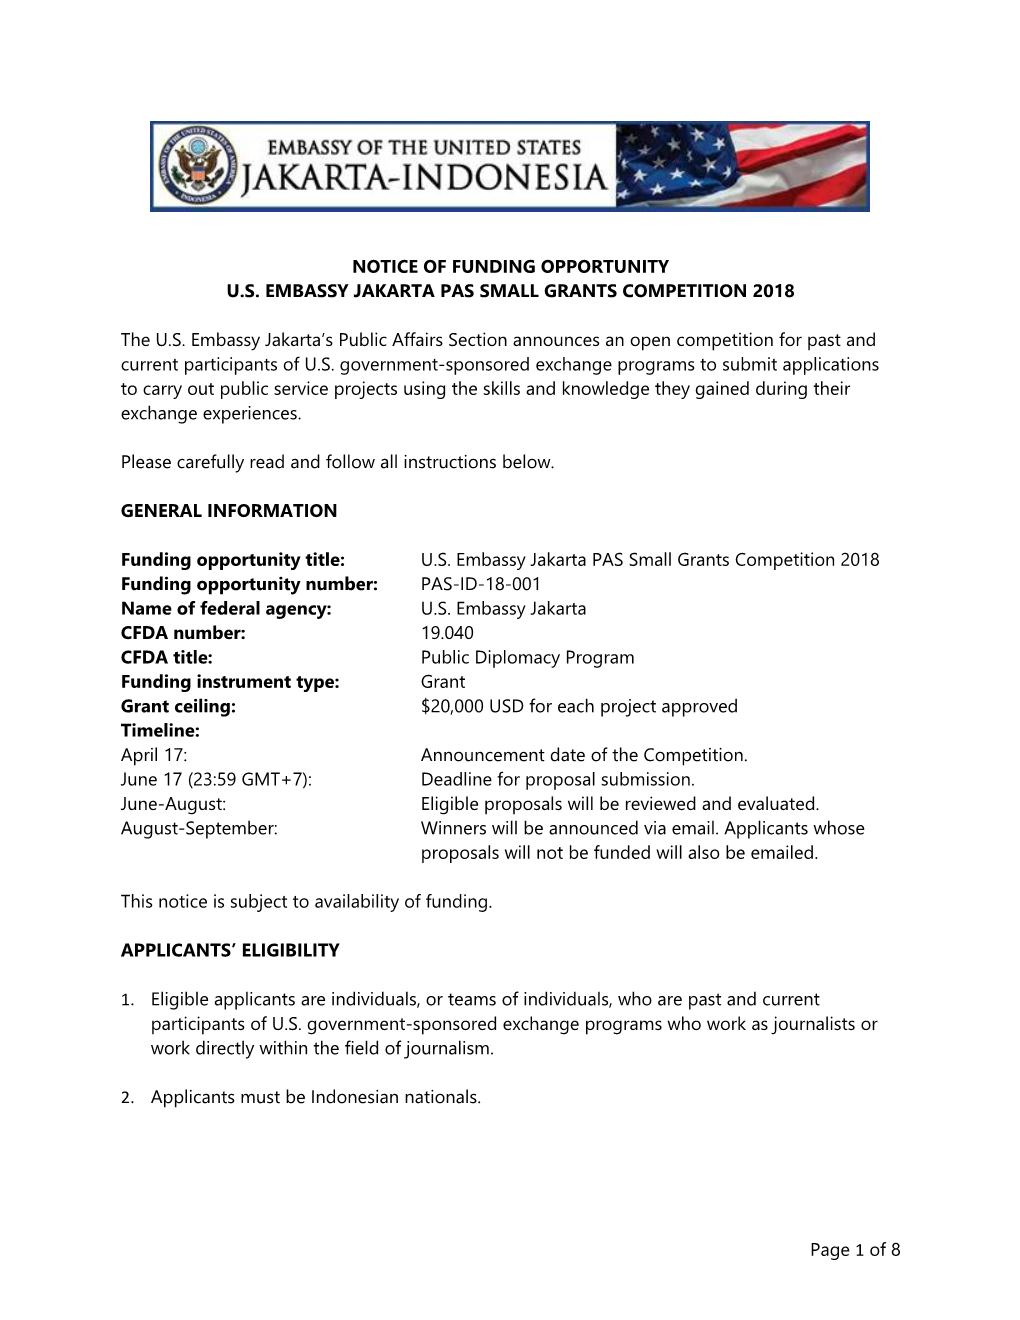 U.S. Embassy Jakarta Pas Small Grants Competition 2018